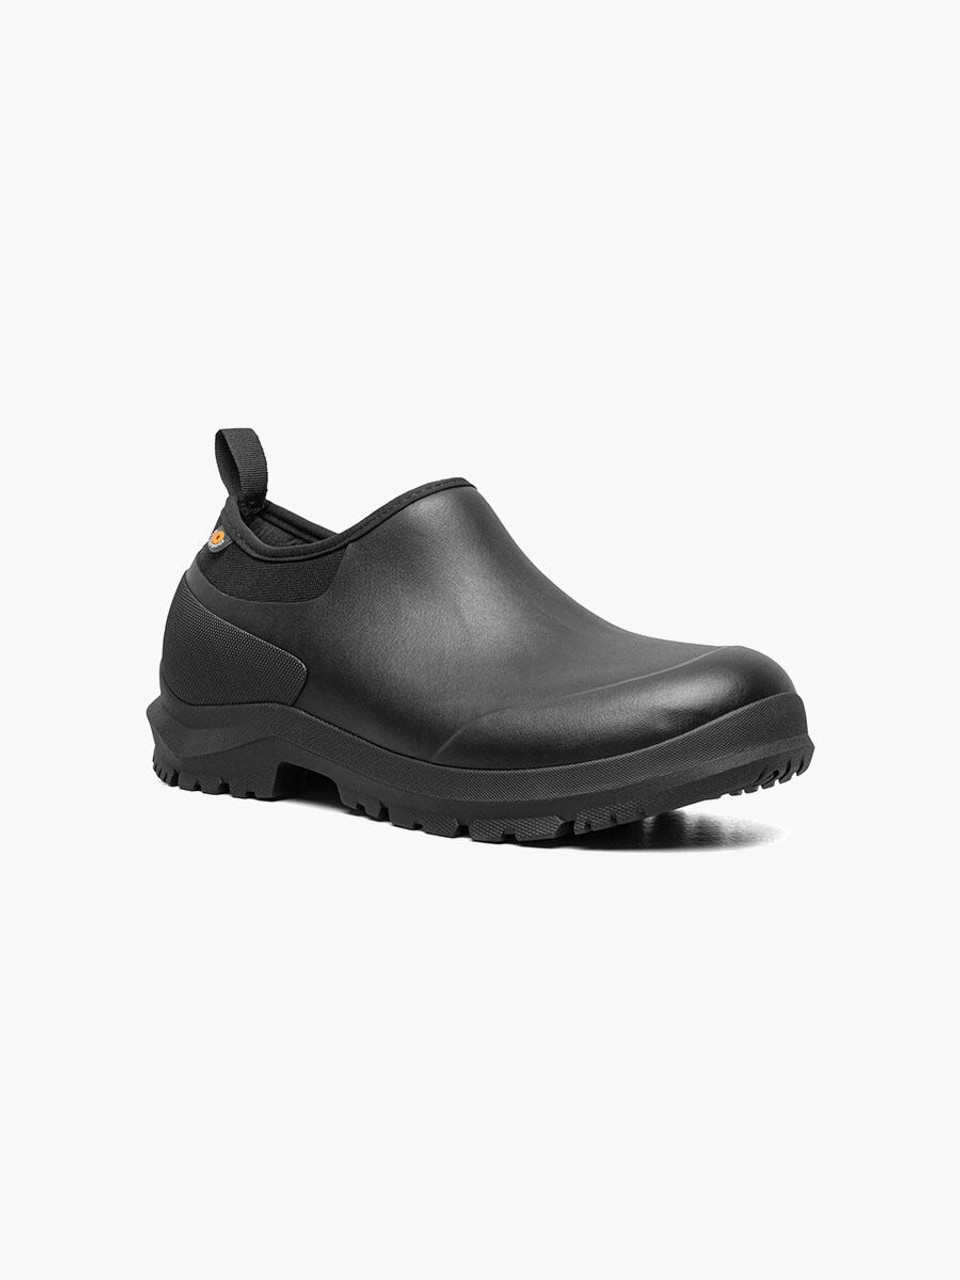 Bogs Sauvie Slip On II Men's Waterproof Shoes